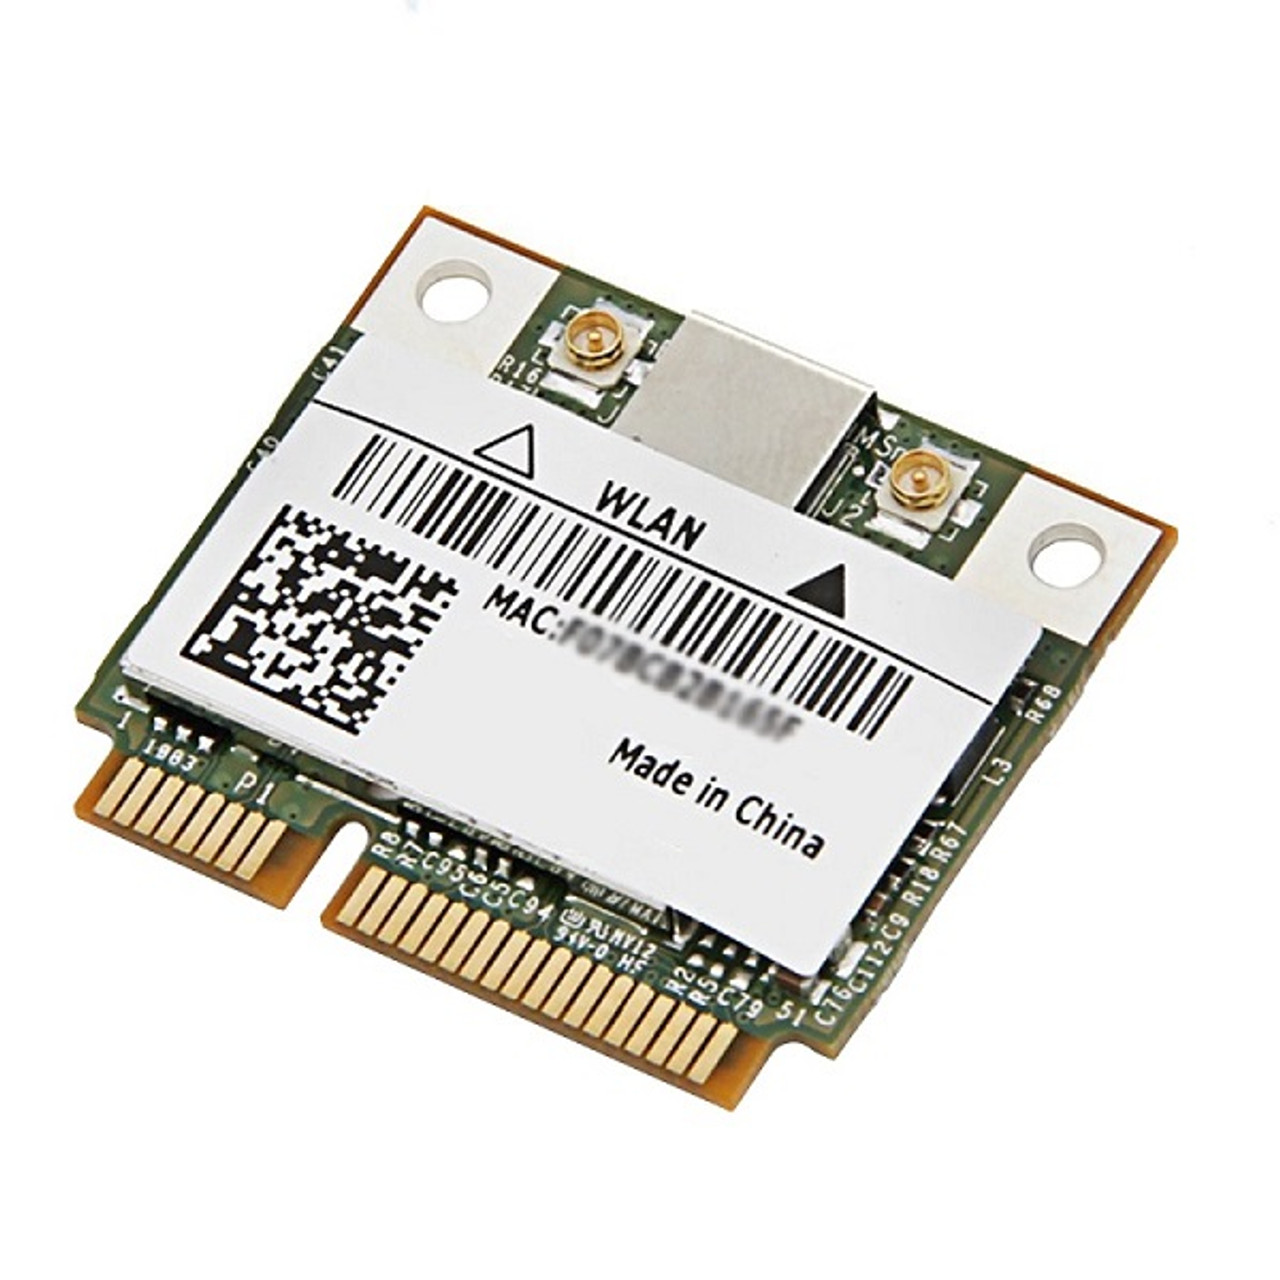 394811-001 - HP Mini PCI 54G 802.11b/g High Speed Wireless LAN (WLAN) Network Interface Card for Pavilion Notebook PCs